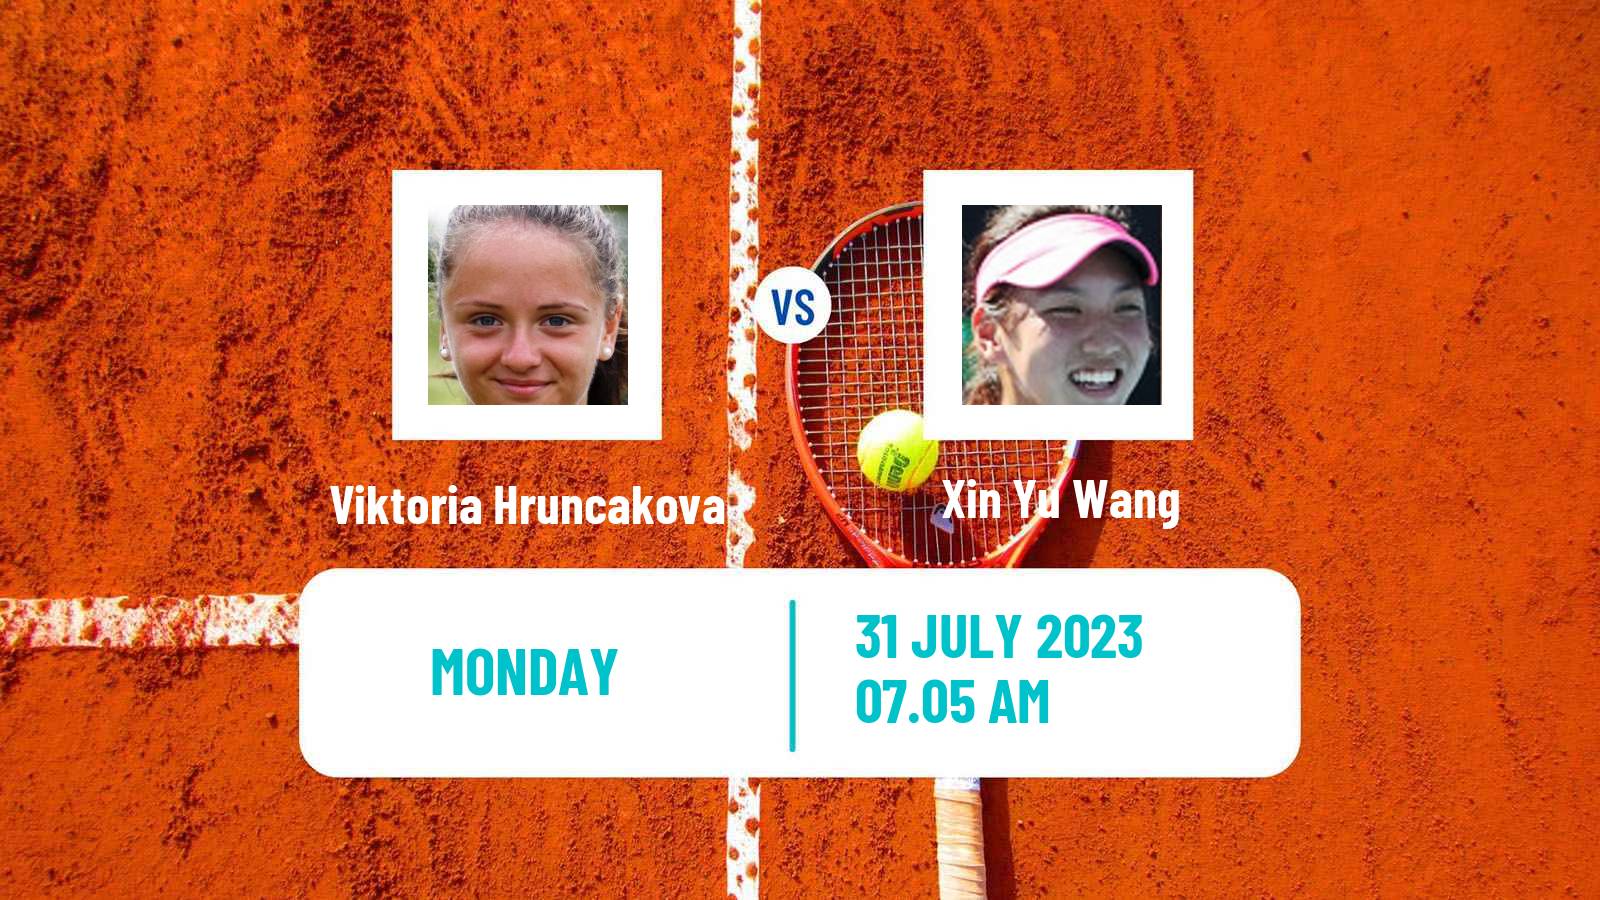 Tennis WTA Prague Viktoria Hruncakova - Xin Yu Wang